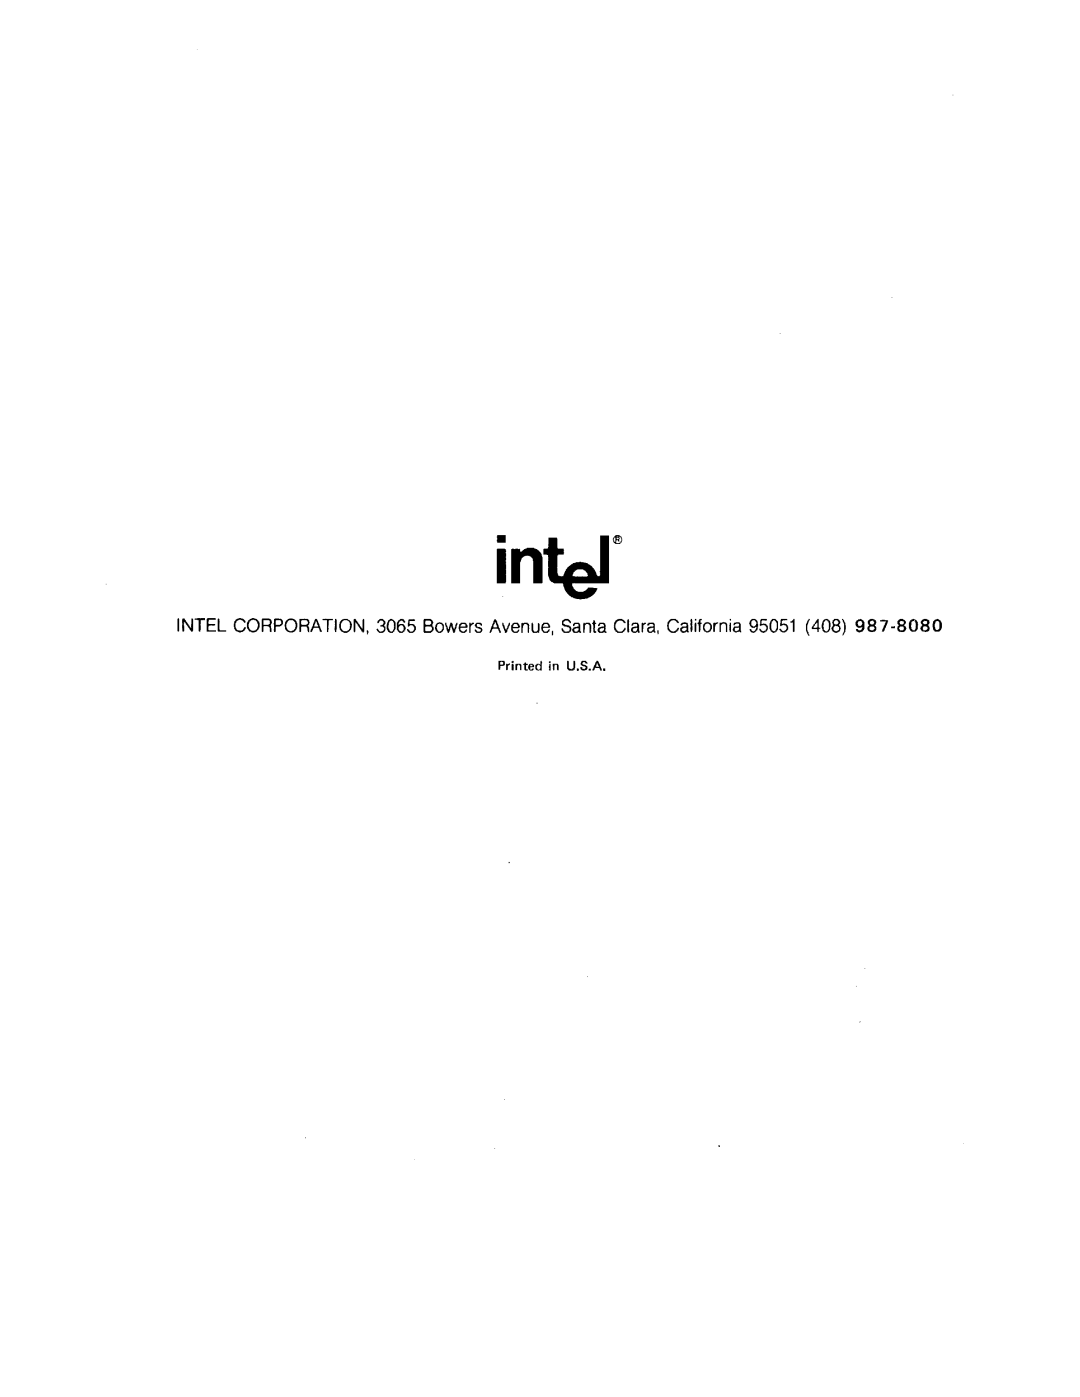 Intel fortran-80 manual inter, Printed in U.S.A 